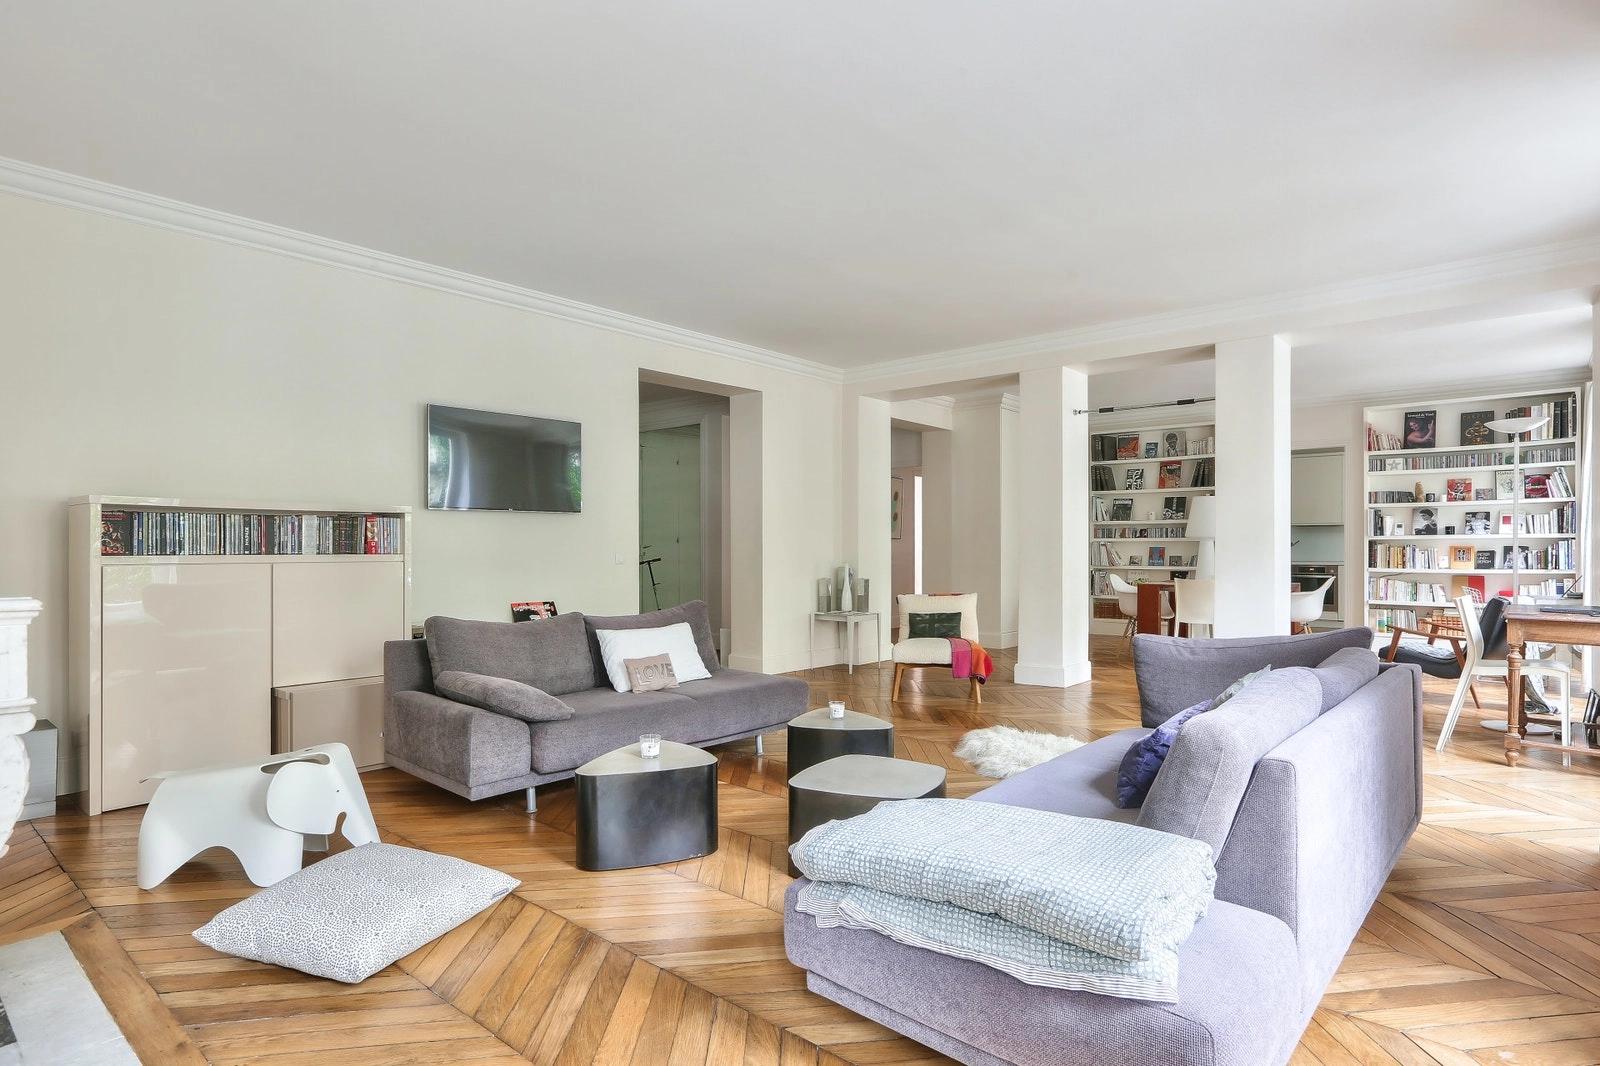 Sala dentro Preciosa, luminosa y cálida casa contemporánea de estilo Haussmann - 1